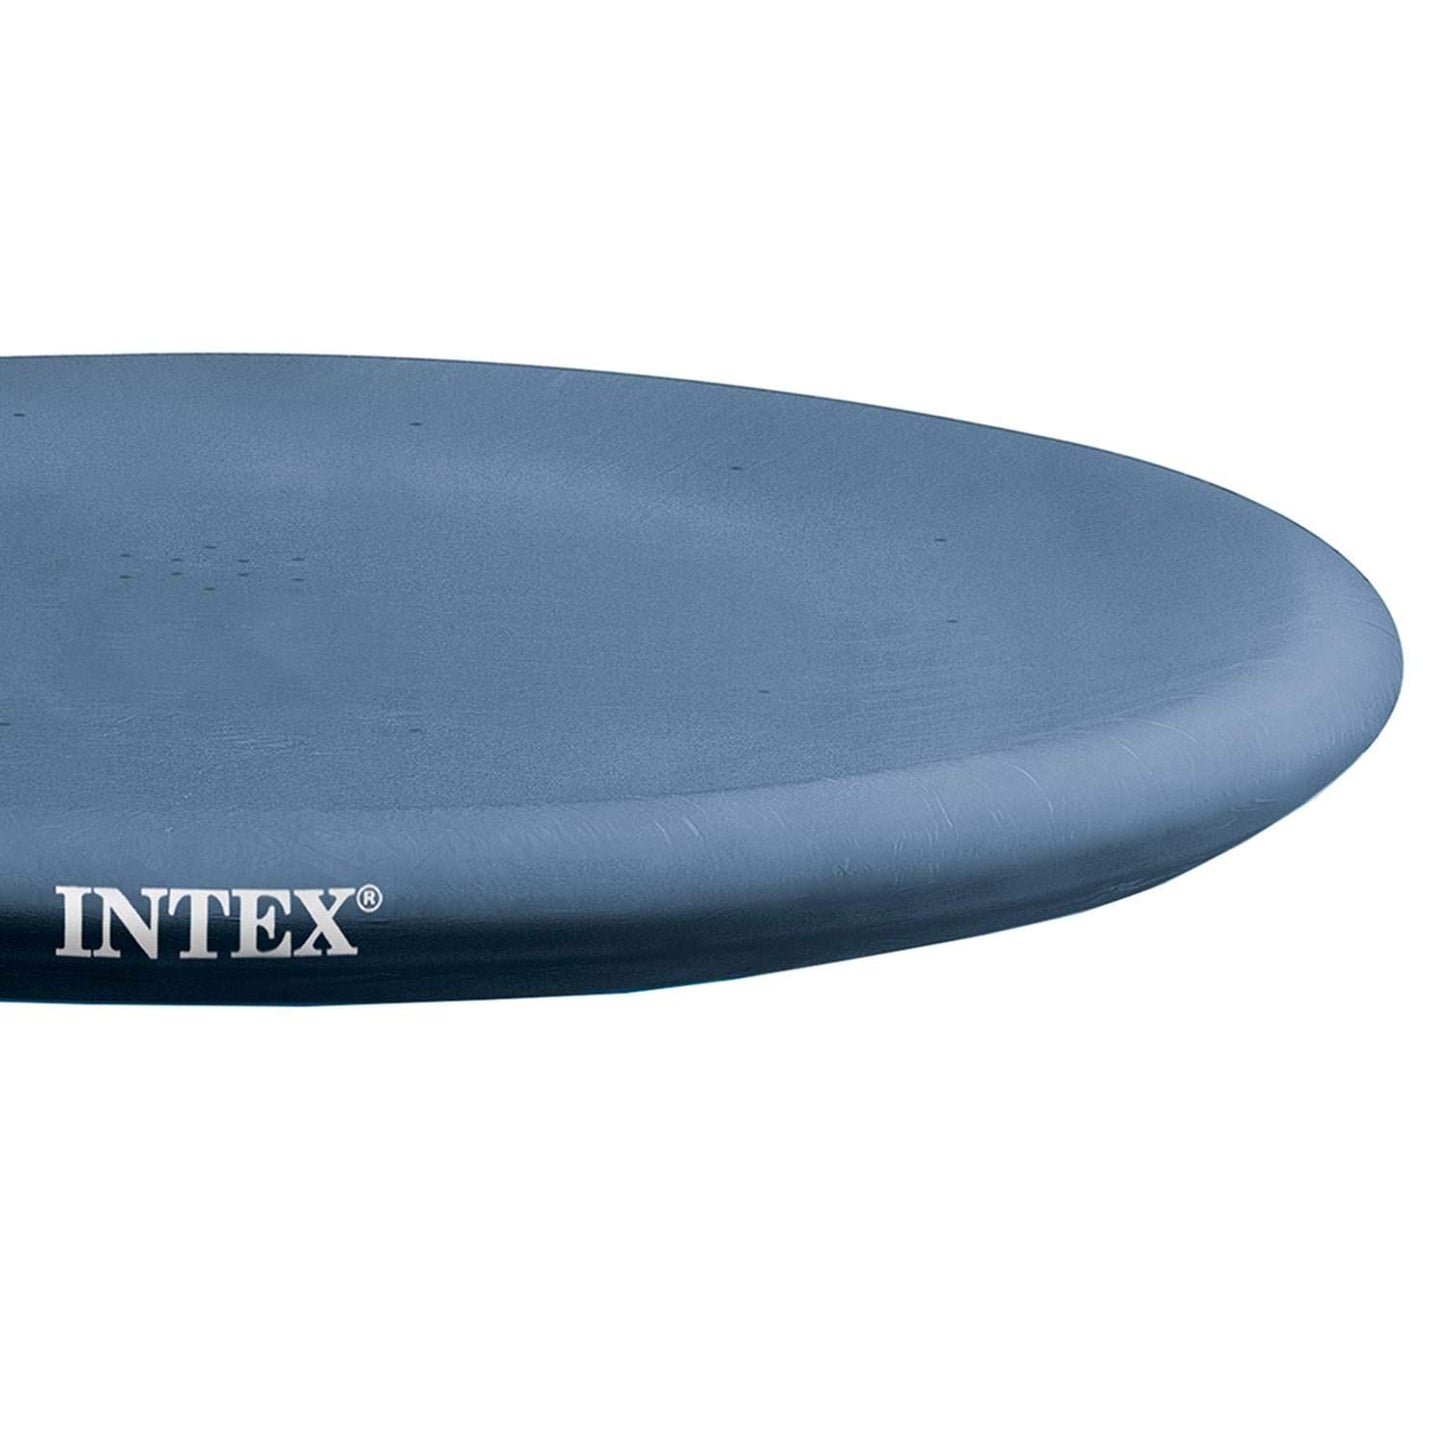 Intex Easy Set Above Ground Pool, 13' x 33"